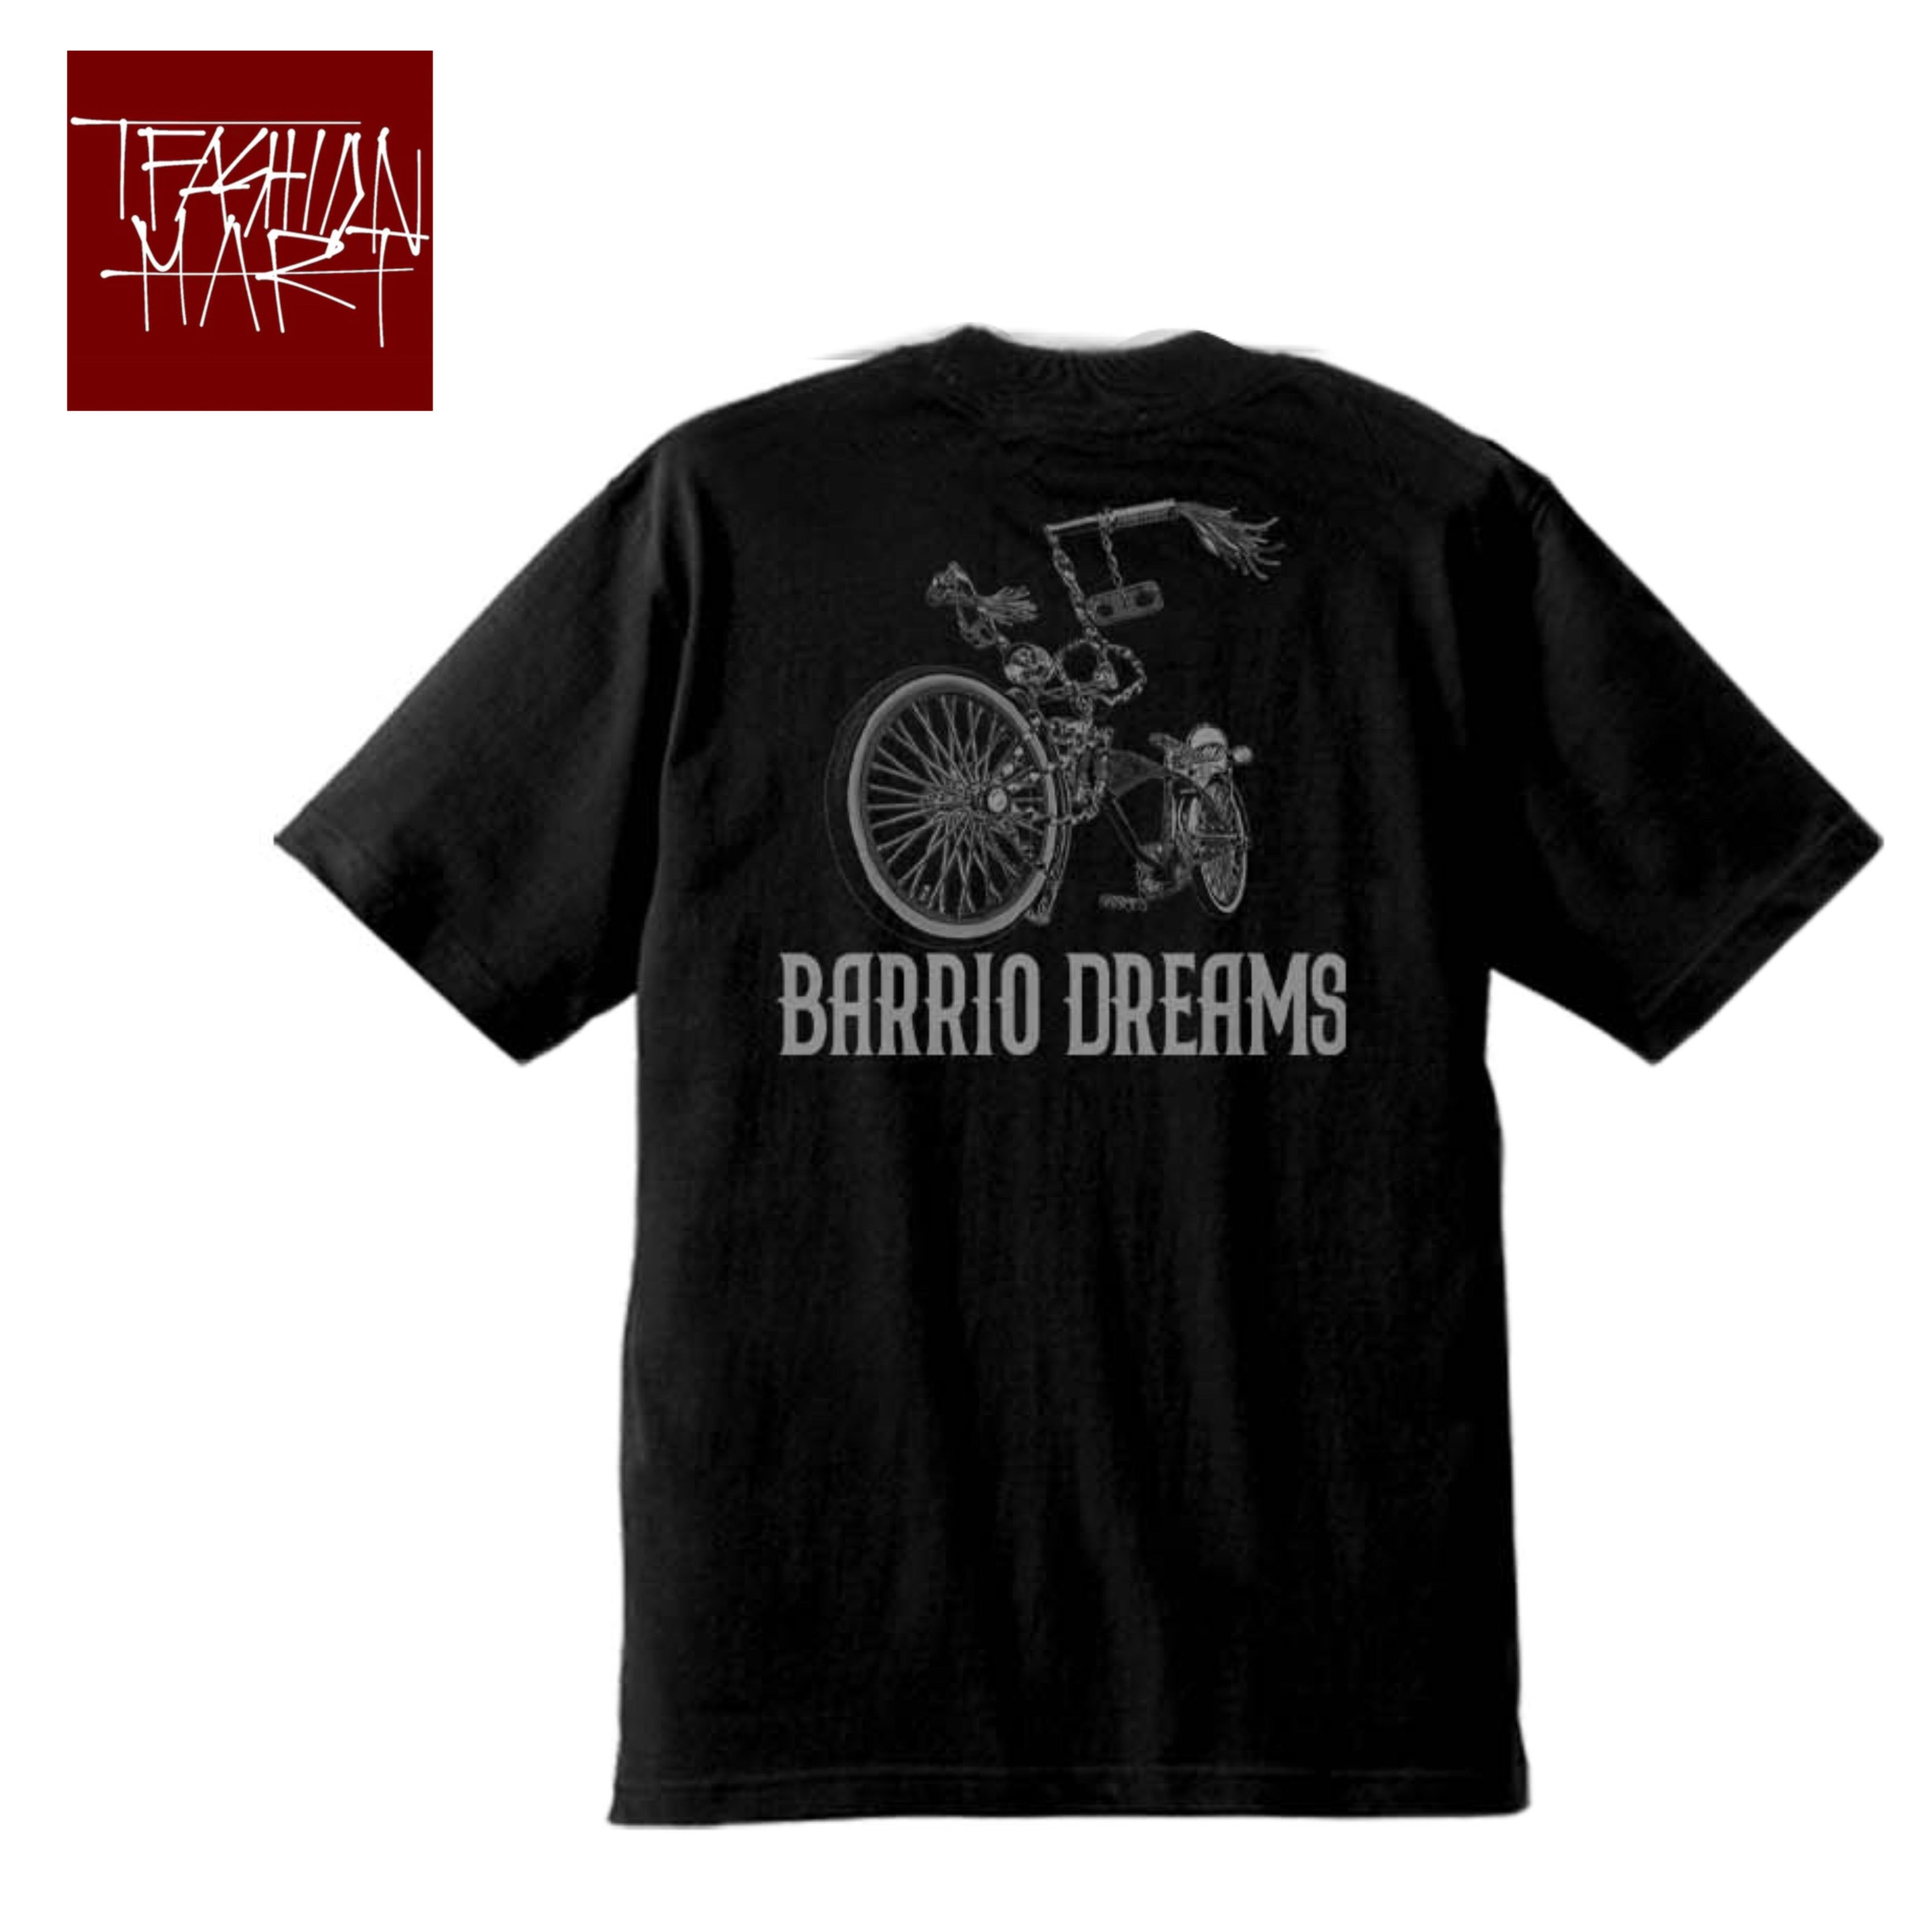 TFashion Graphic Tee - Barrio Dreams